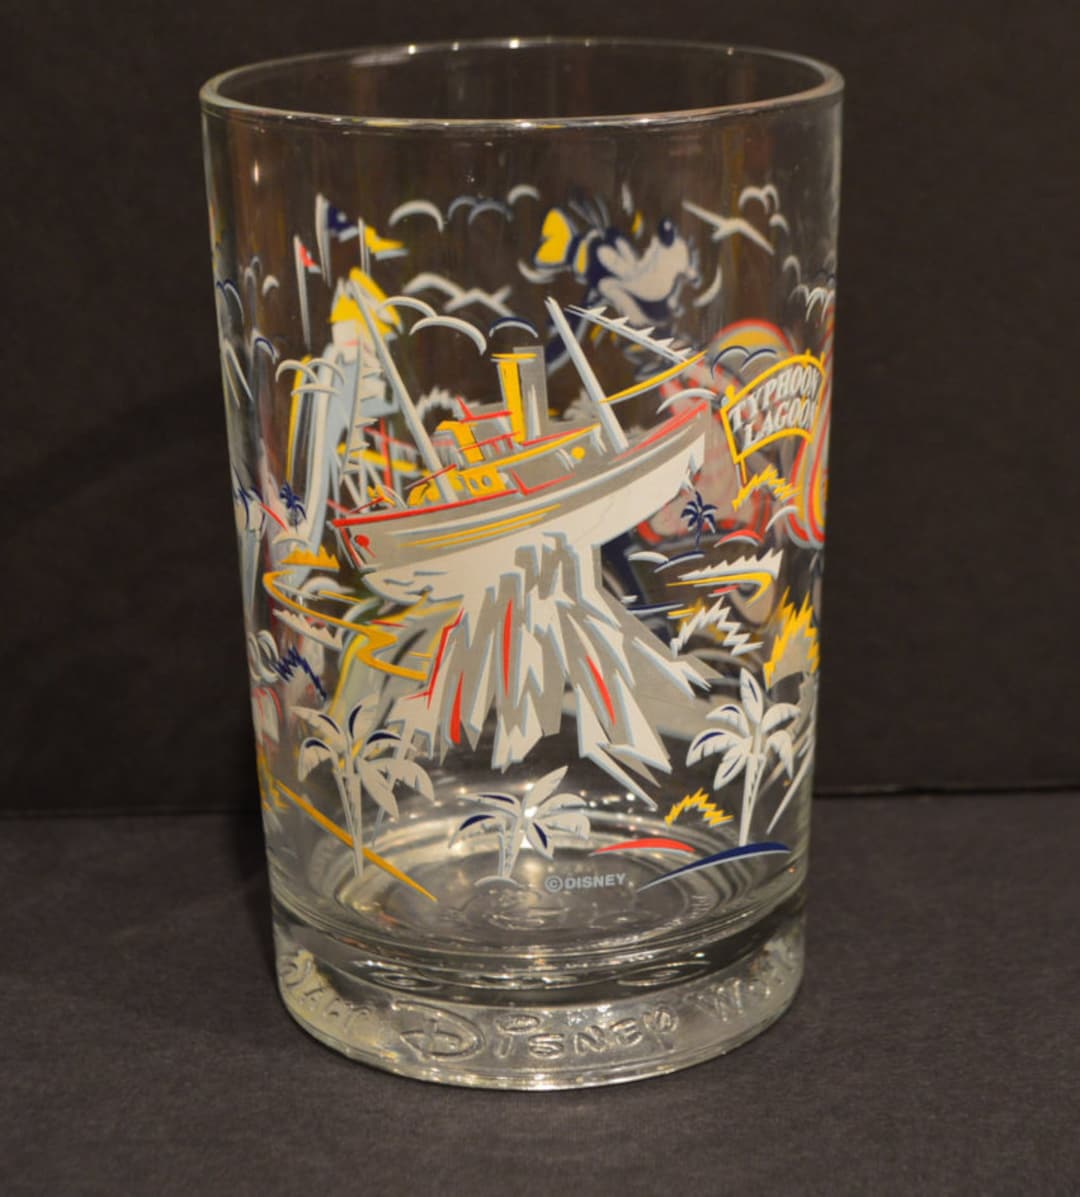 c. 1996 Mickey Mouse McDonald's Disney World 25th Anniversary Glass: 73,300  ppm Lead + 1,855 ppm Cadmium